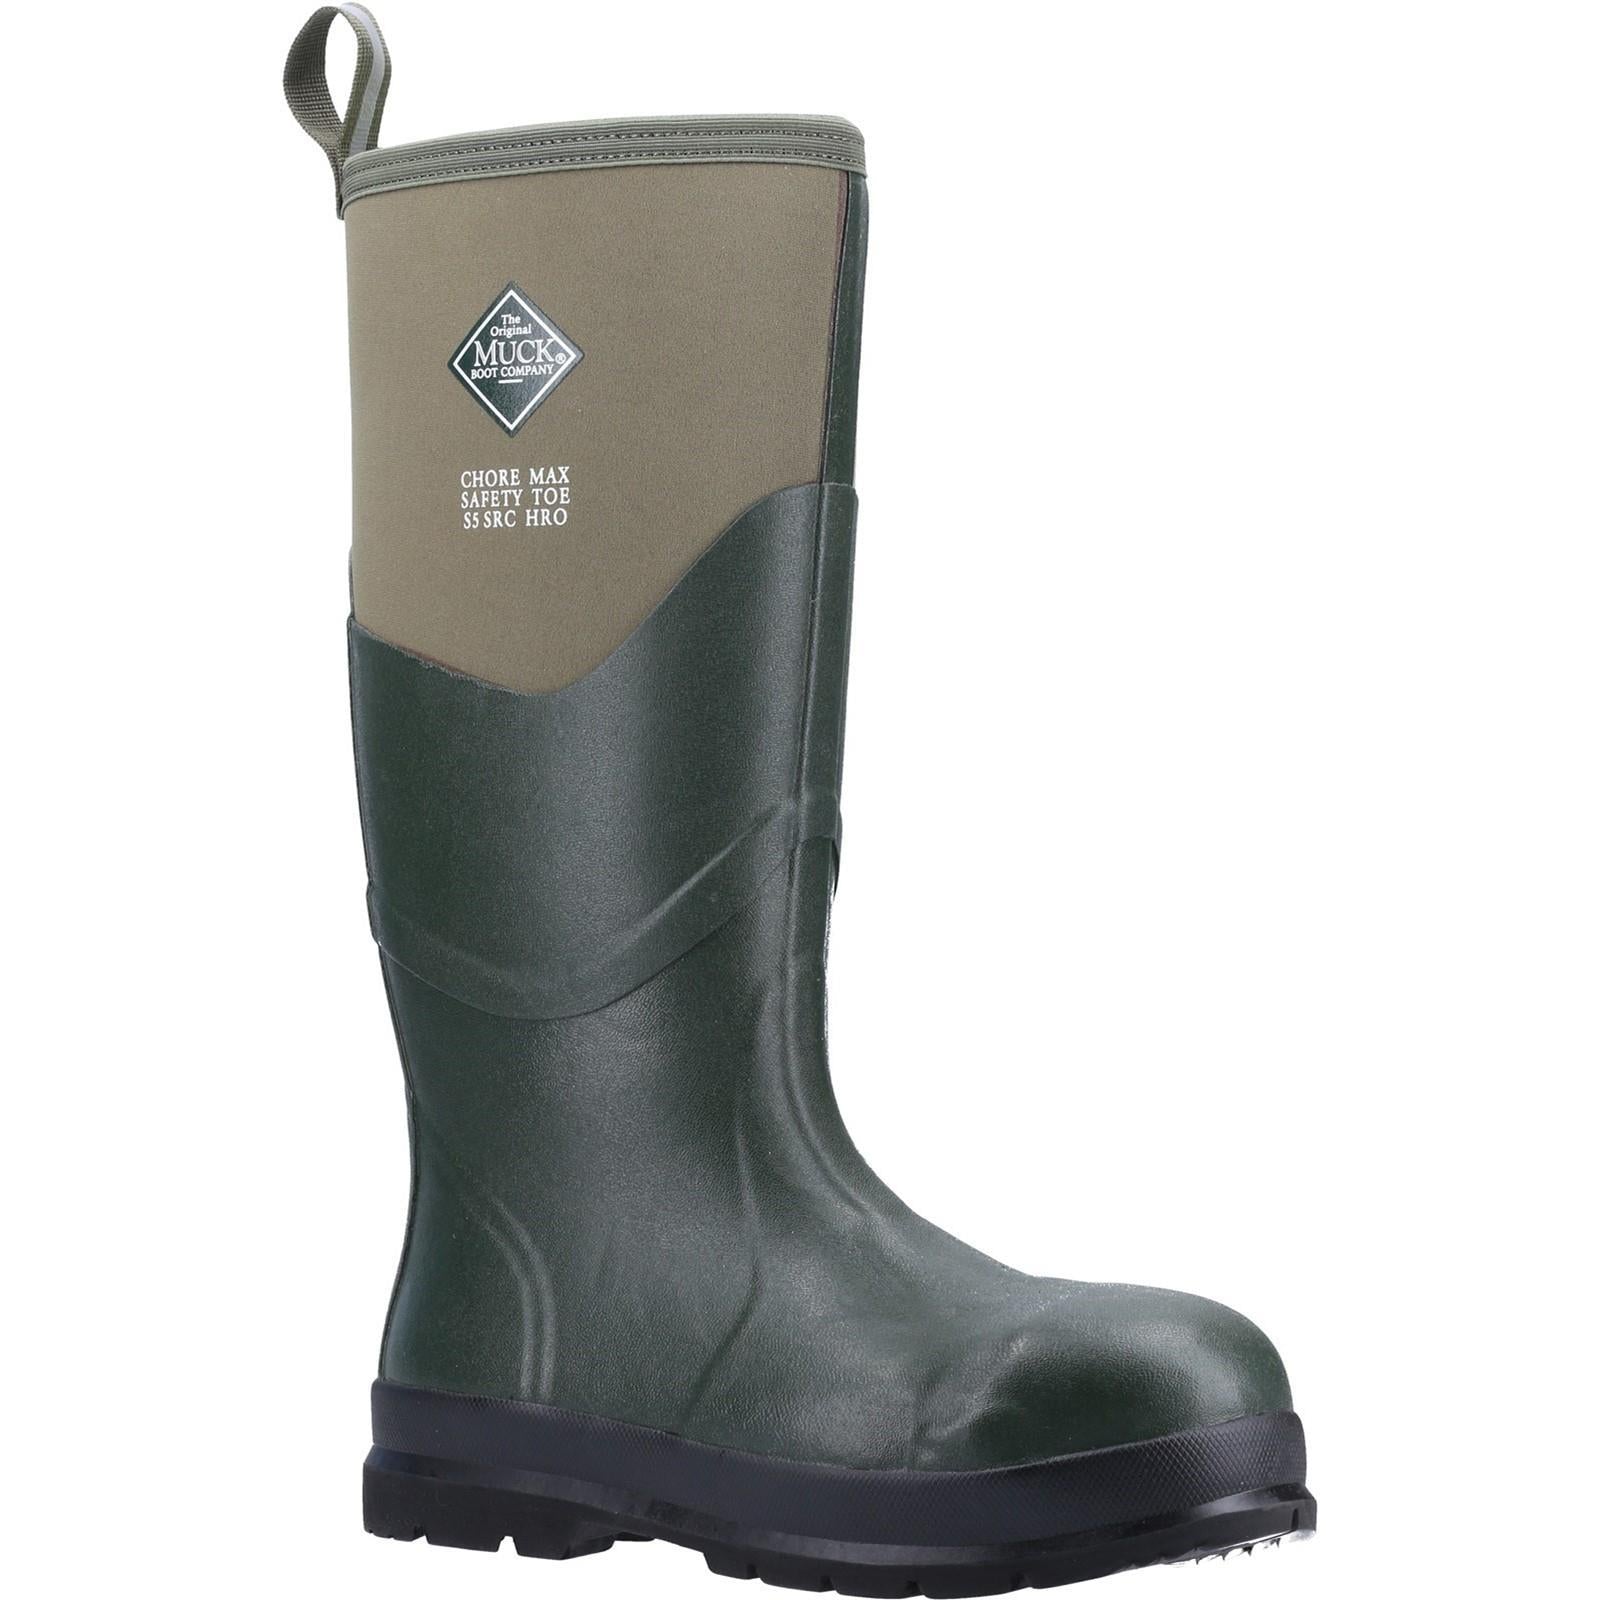 Muck Chore Max S5 moss green waterproof steel toe work safety wellington boots